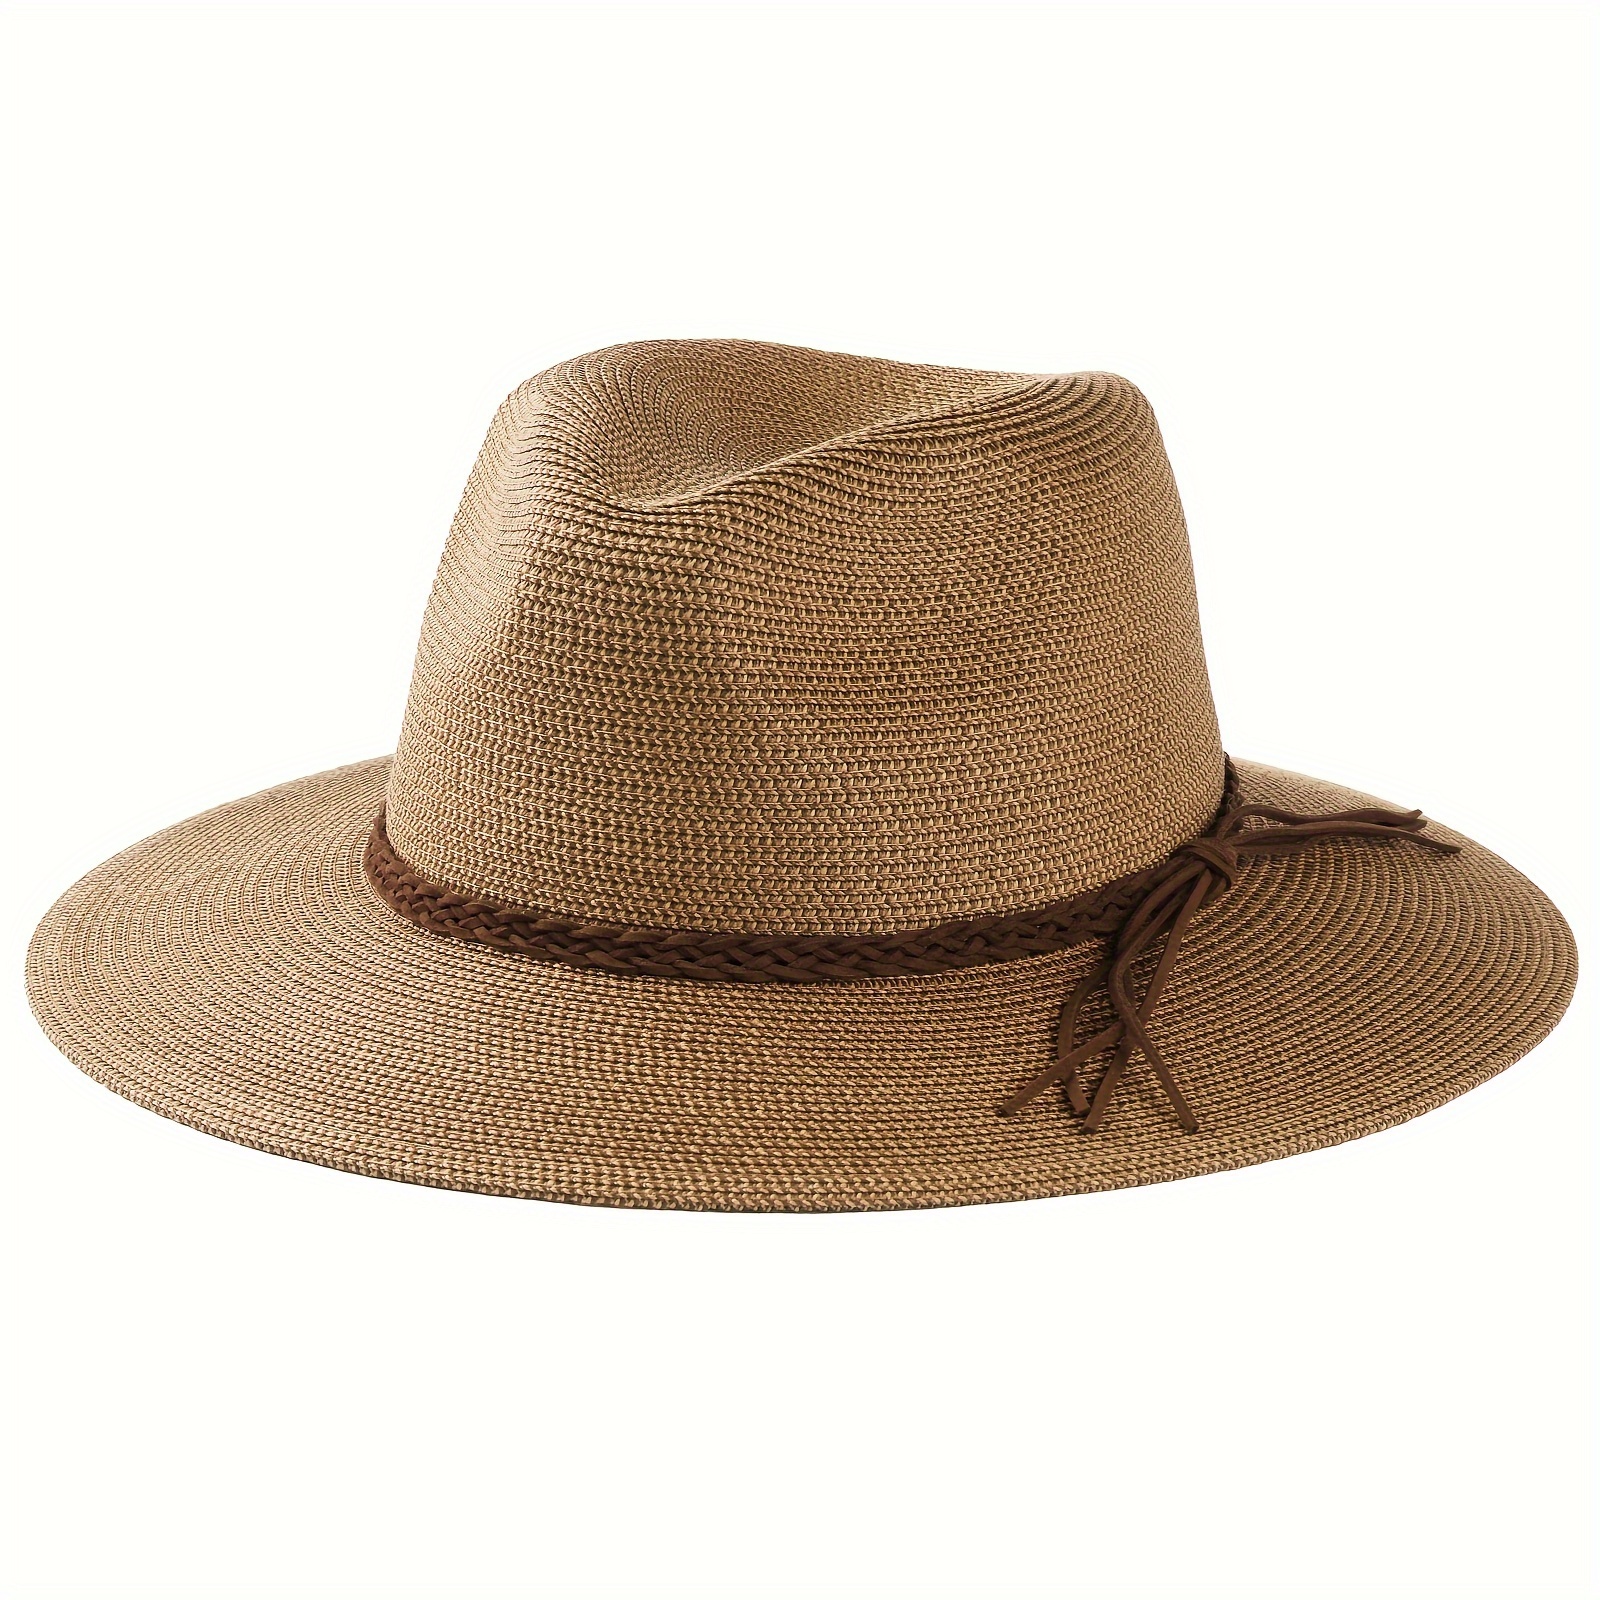 1pc women Belt Decor Straw Hat Tape Decor Boho Straw Hat Beach Hat